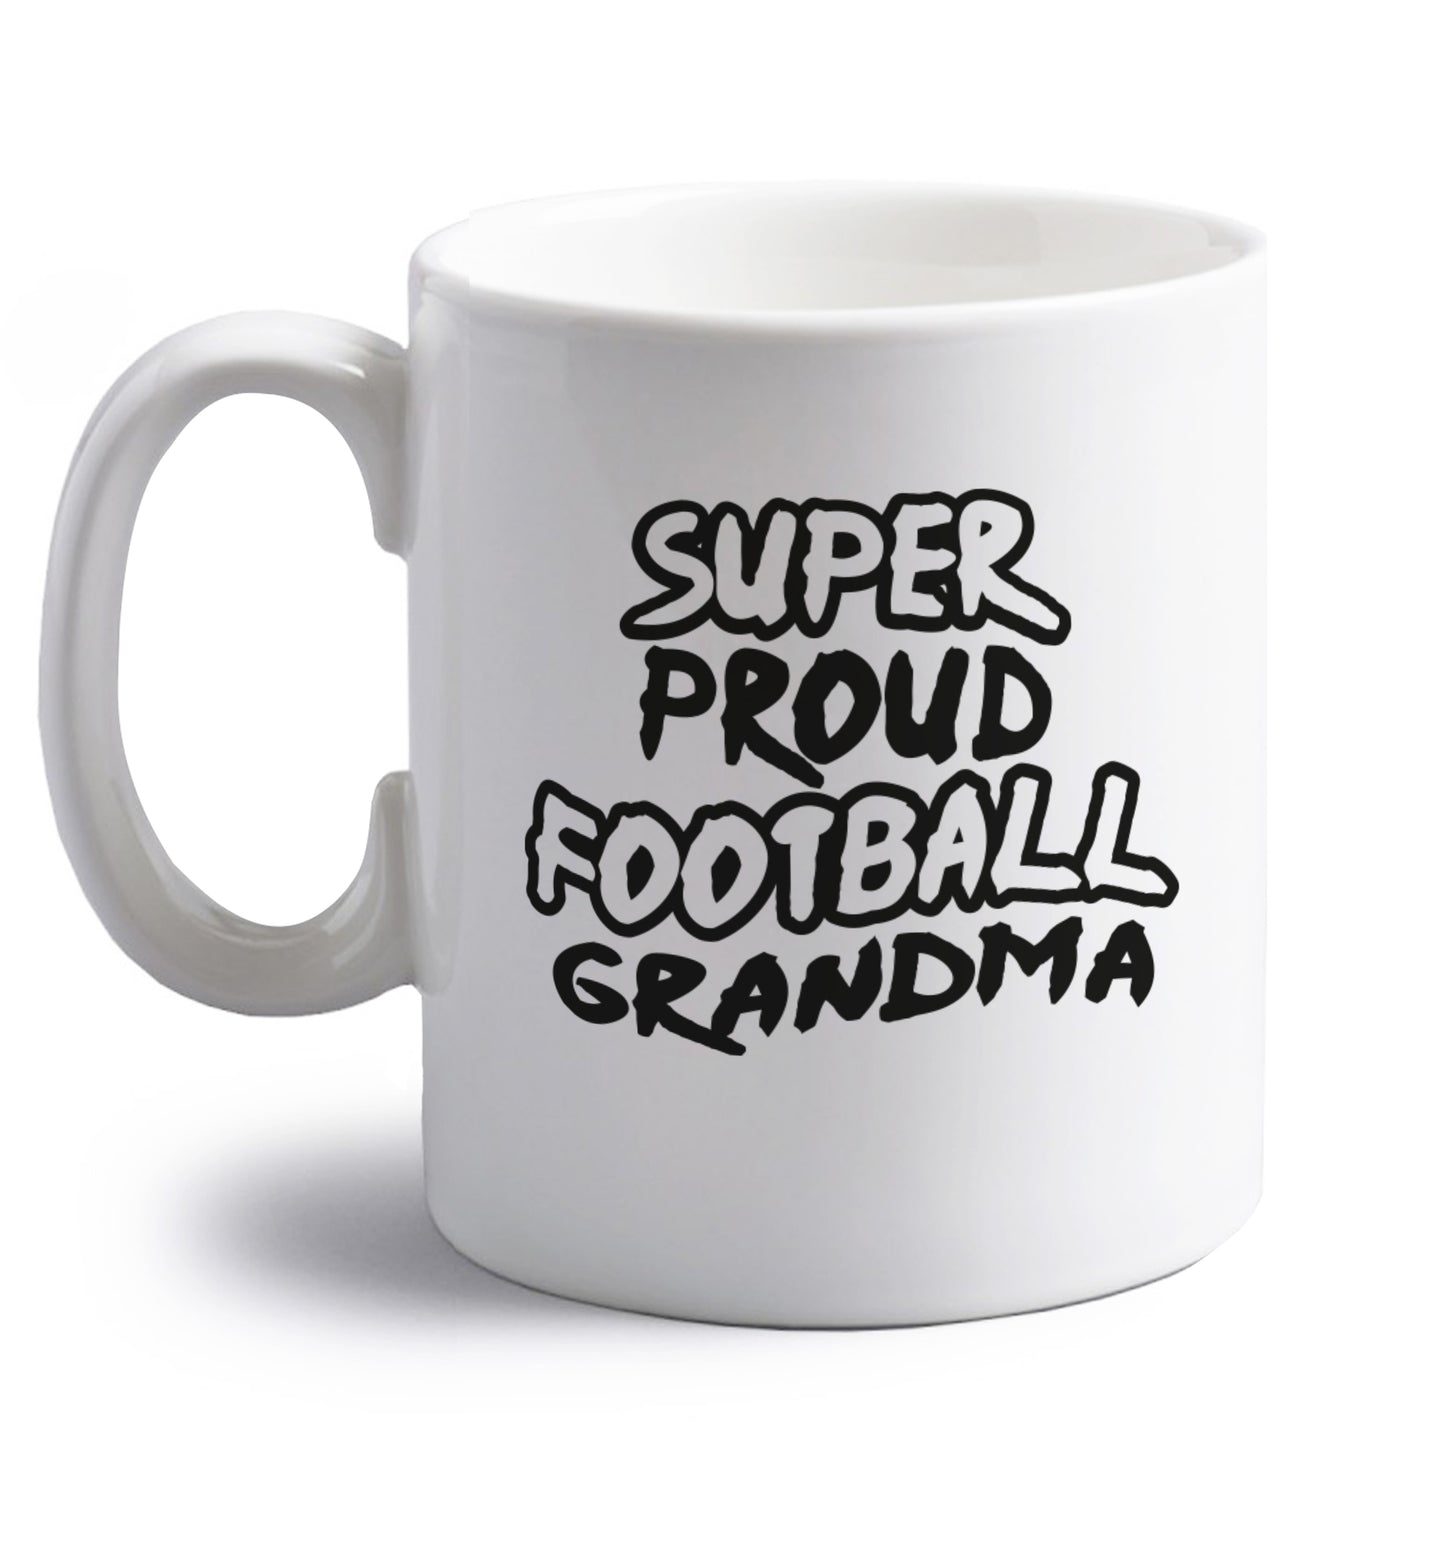 Super proud football grandma right handed white ceramic mug 